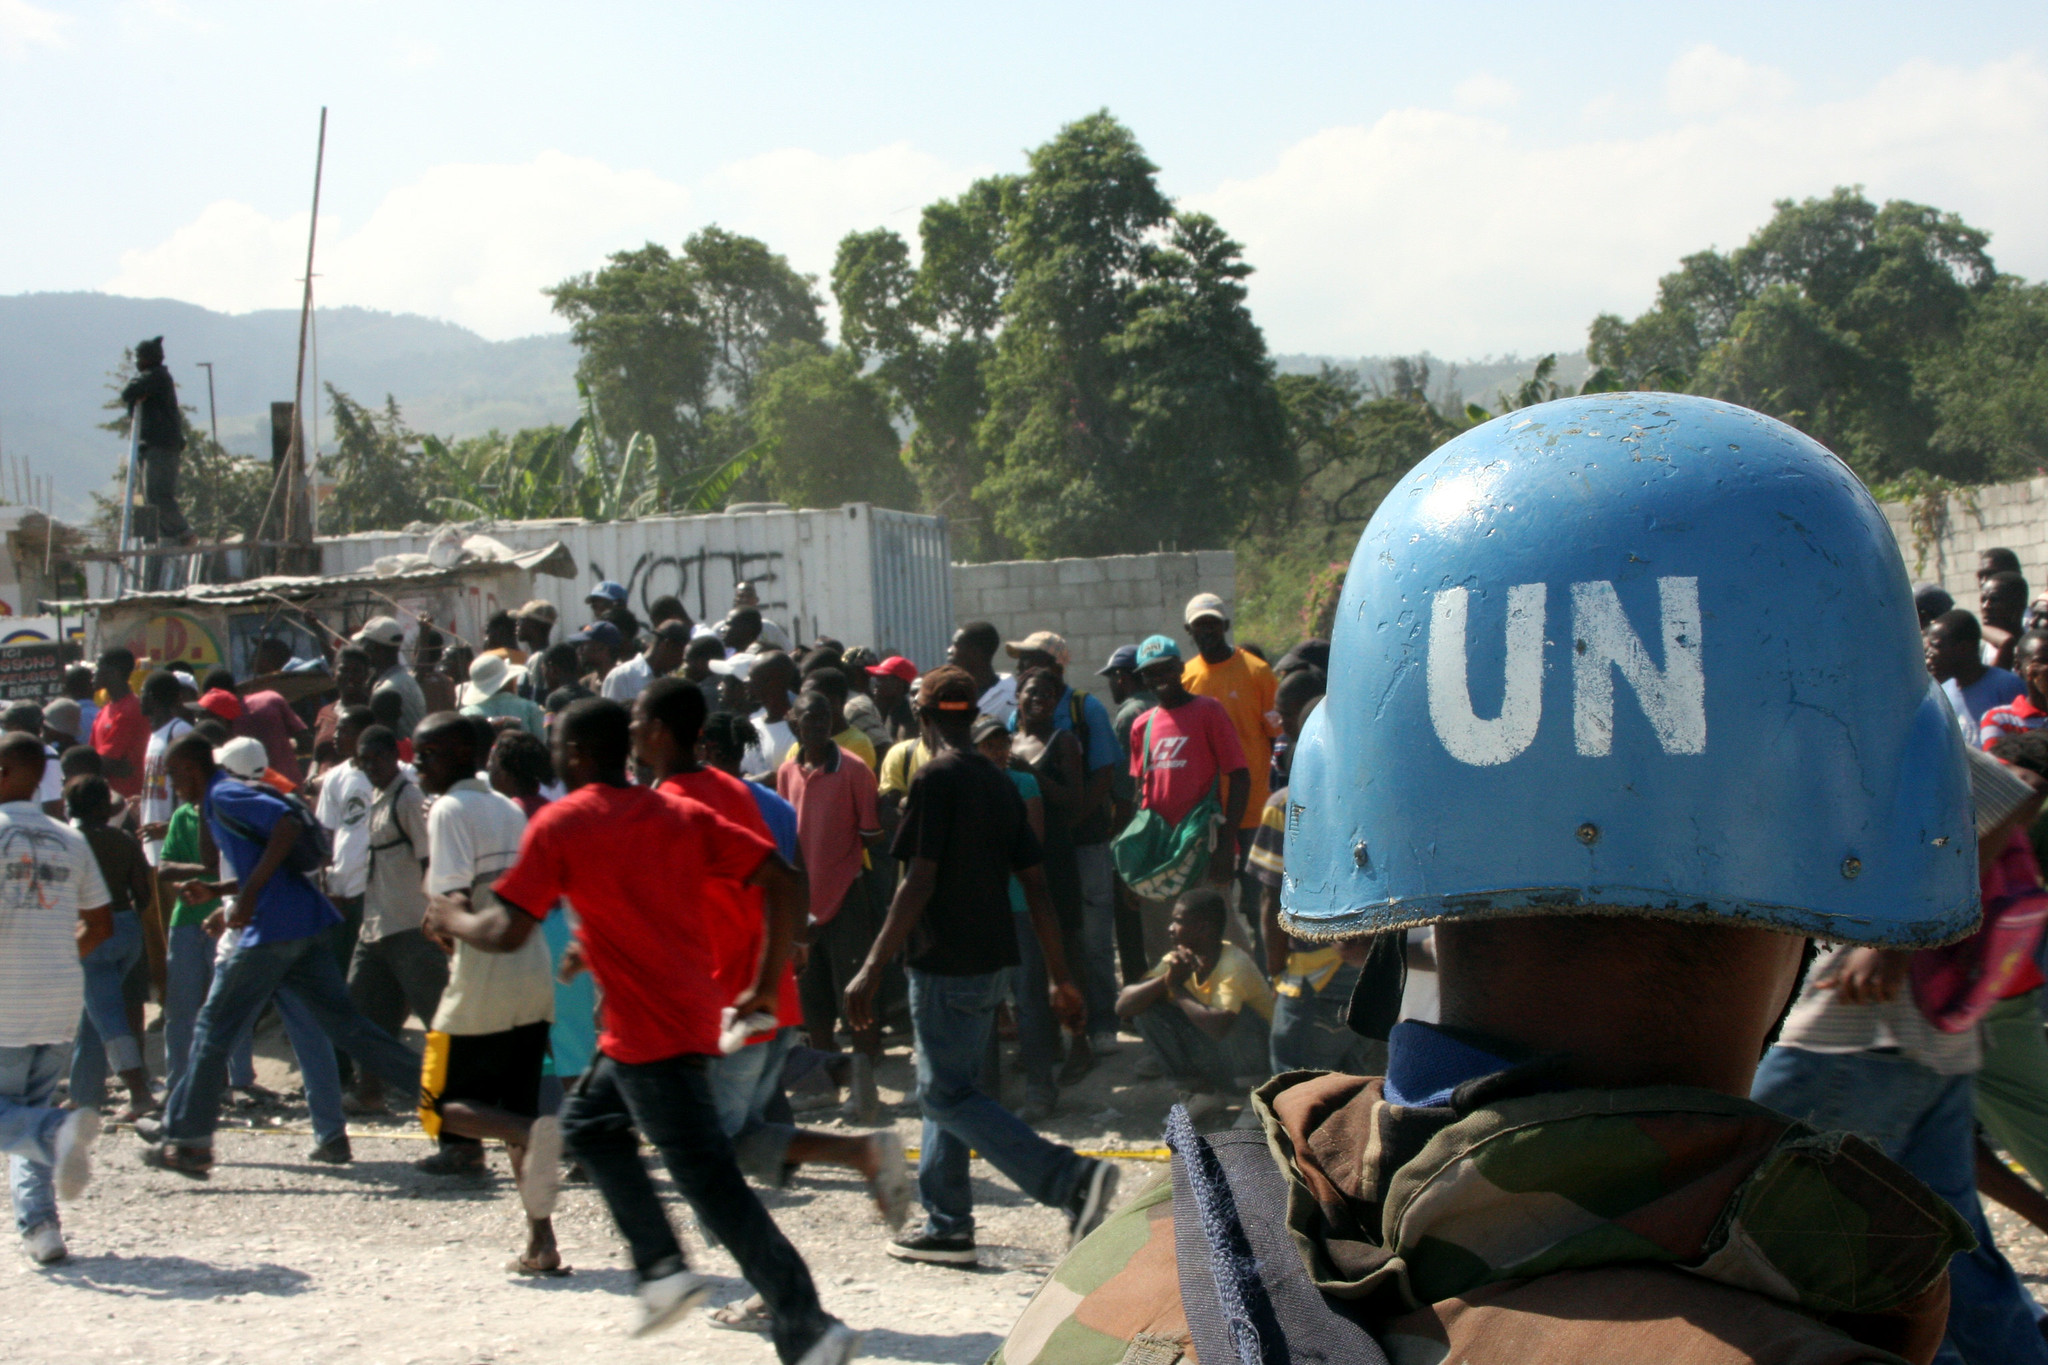 UN Haiti Image public domain